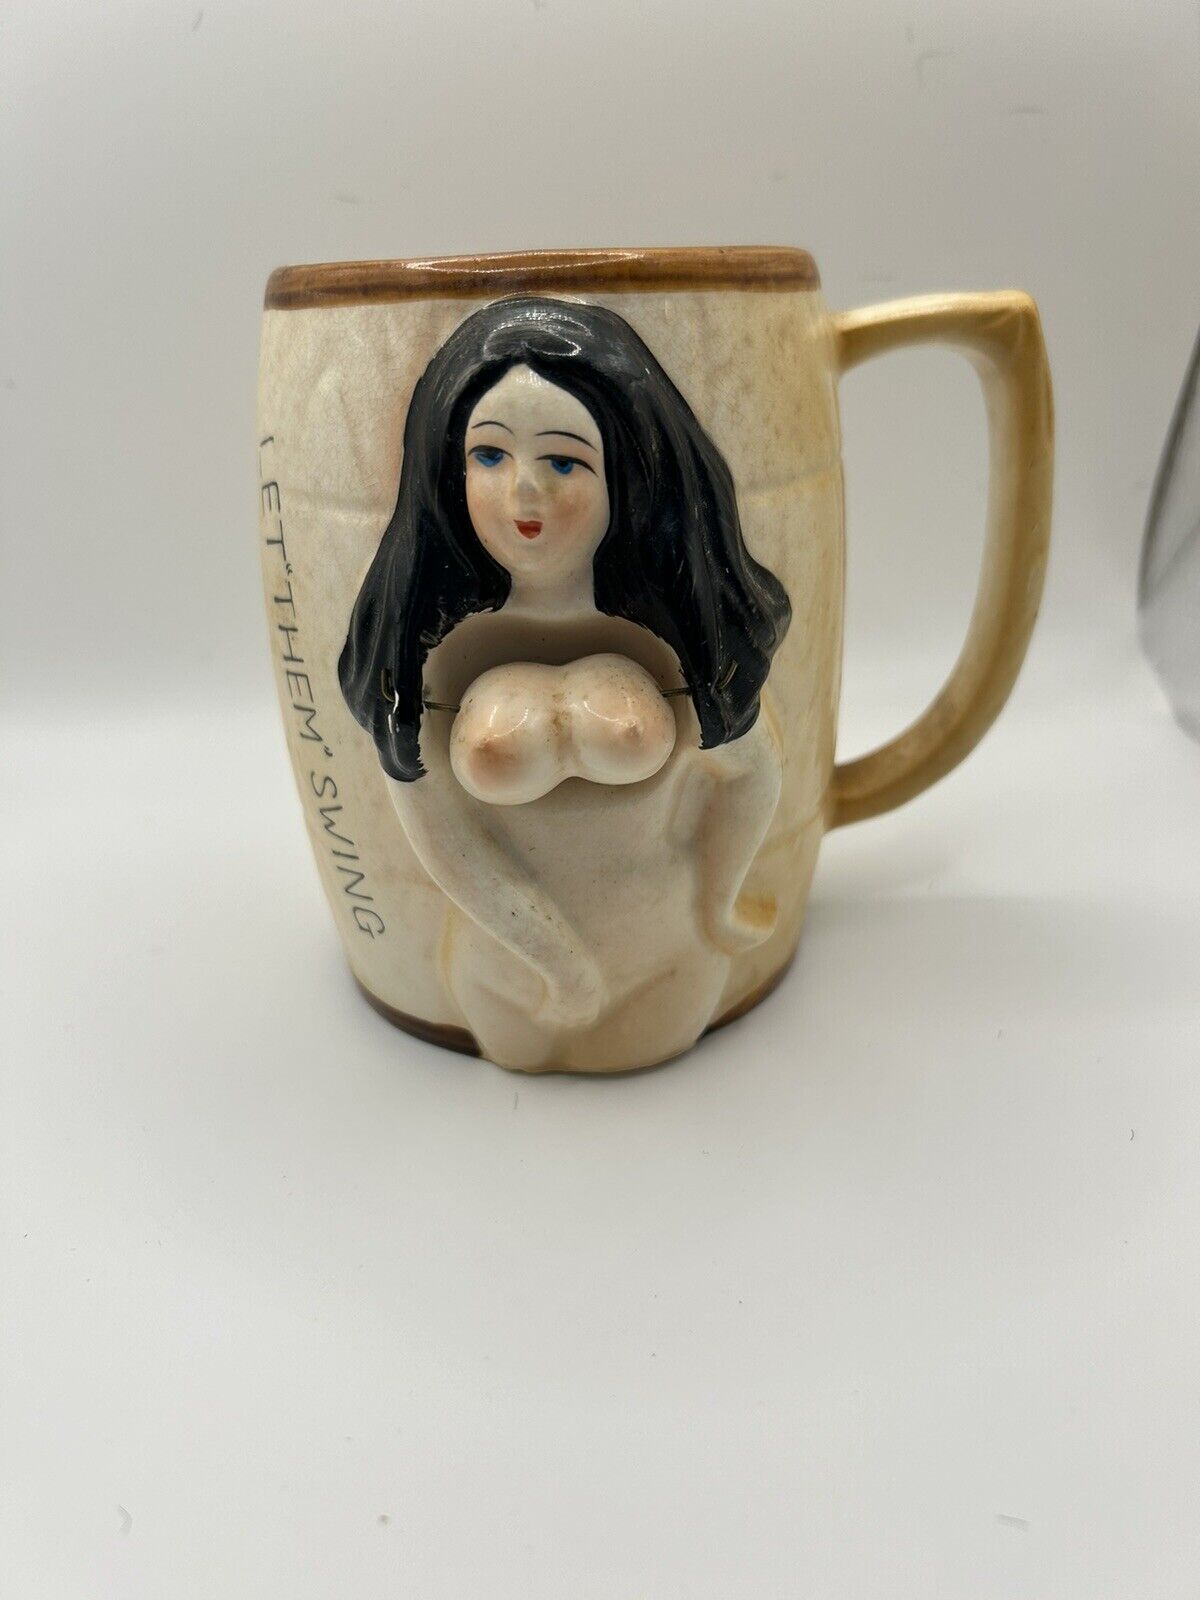 Vintage Swinging Boobs Mug Let Them Swing Lady Japan Ceramic Novelty Cup Kitschy